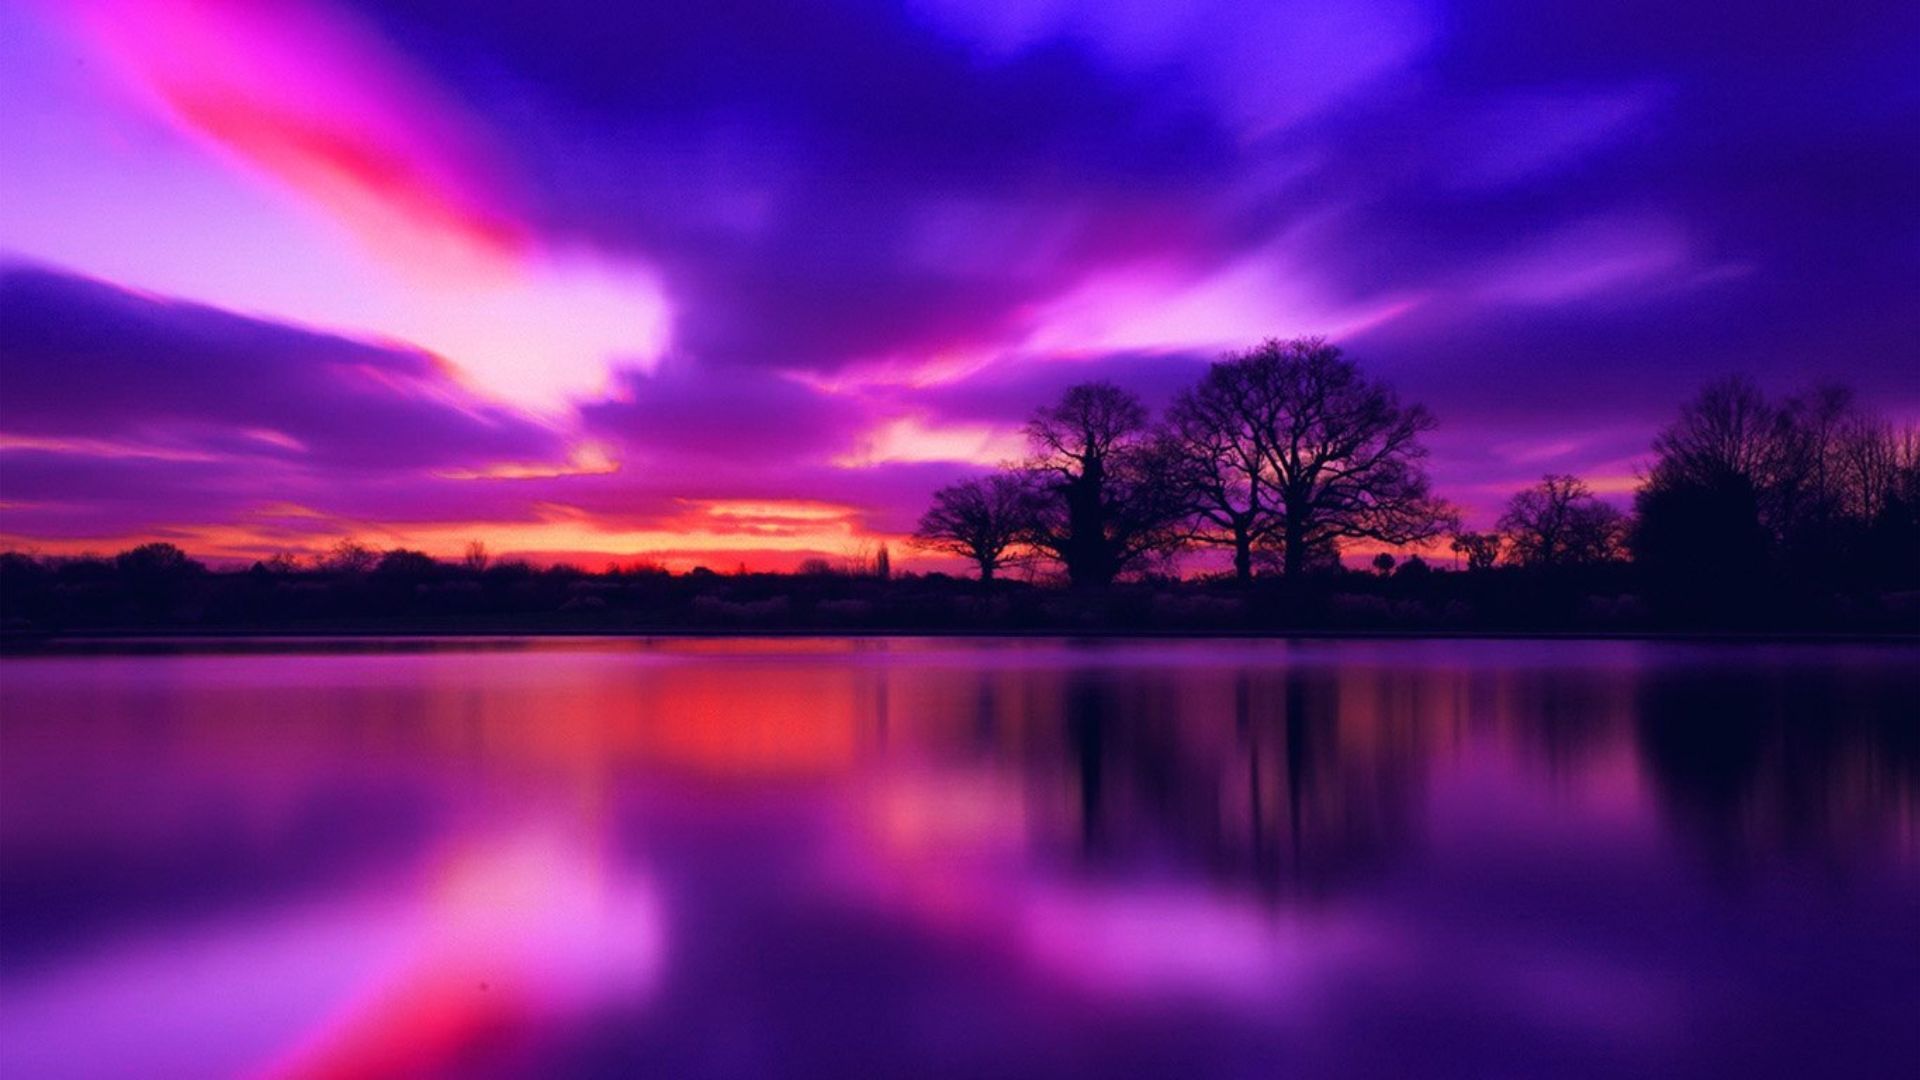 The purple sky and the lake - Sunrise